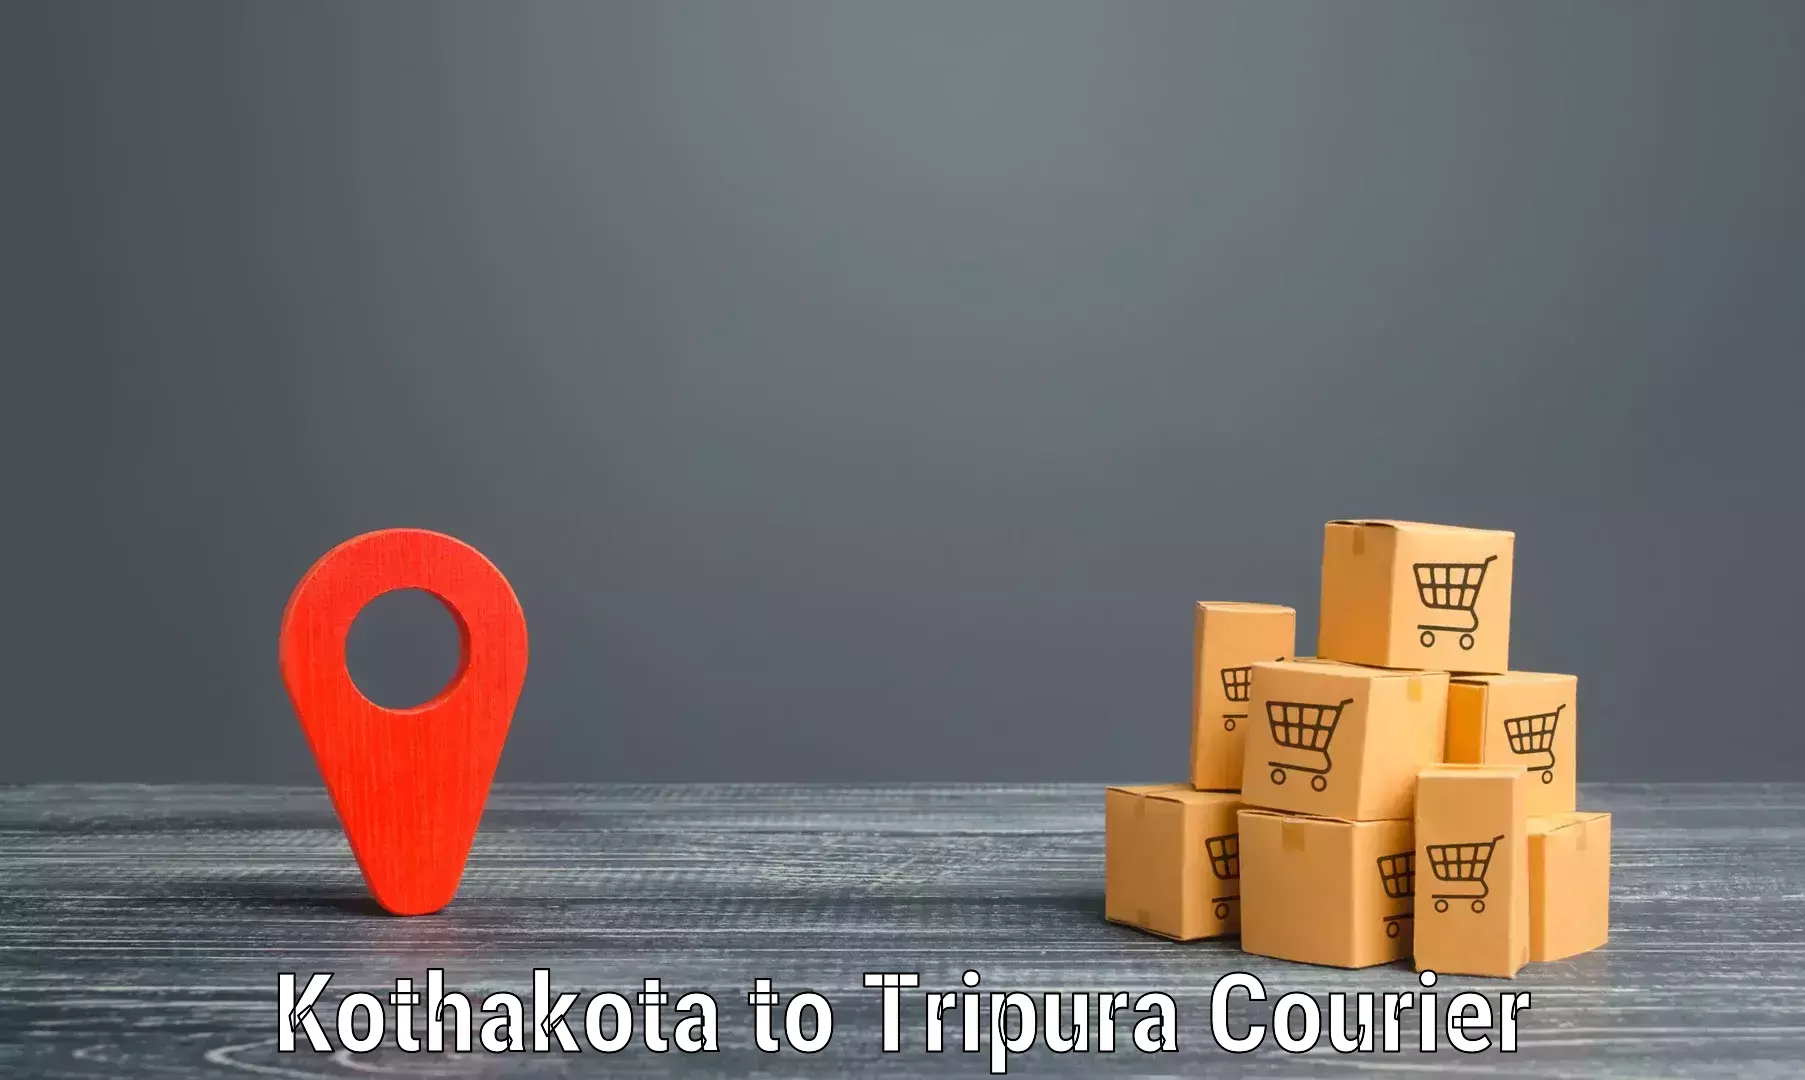 Reliable logistics providers Kothakota to West Tripura